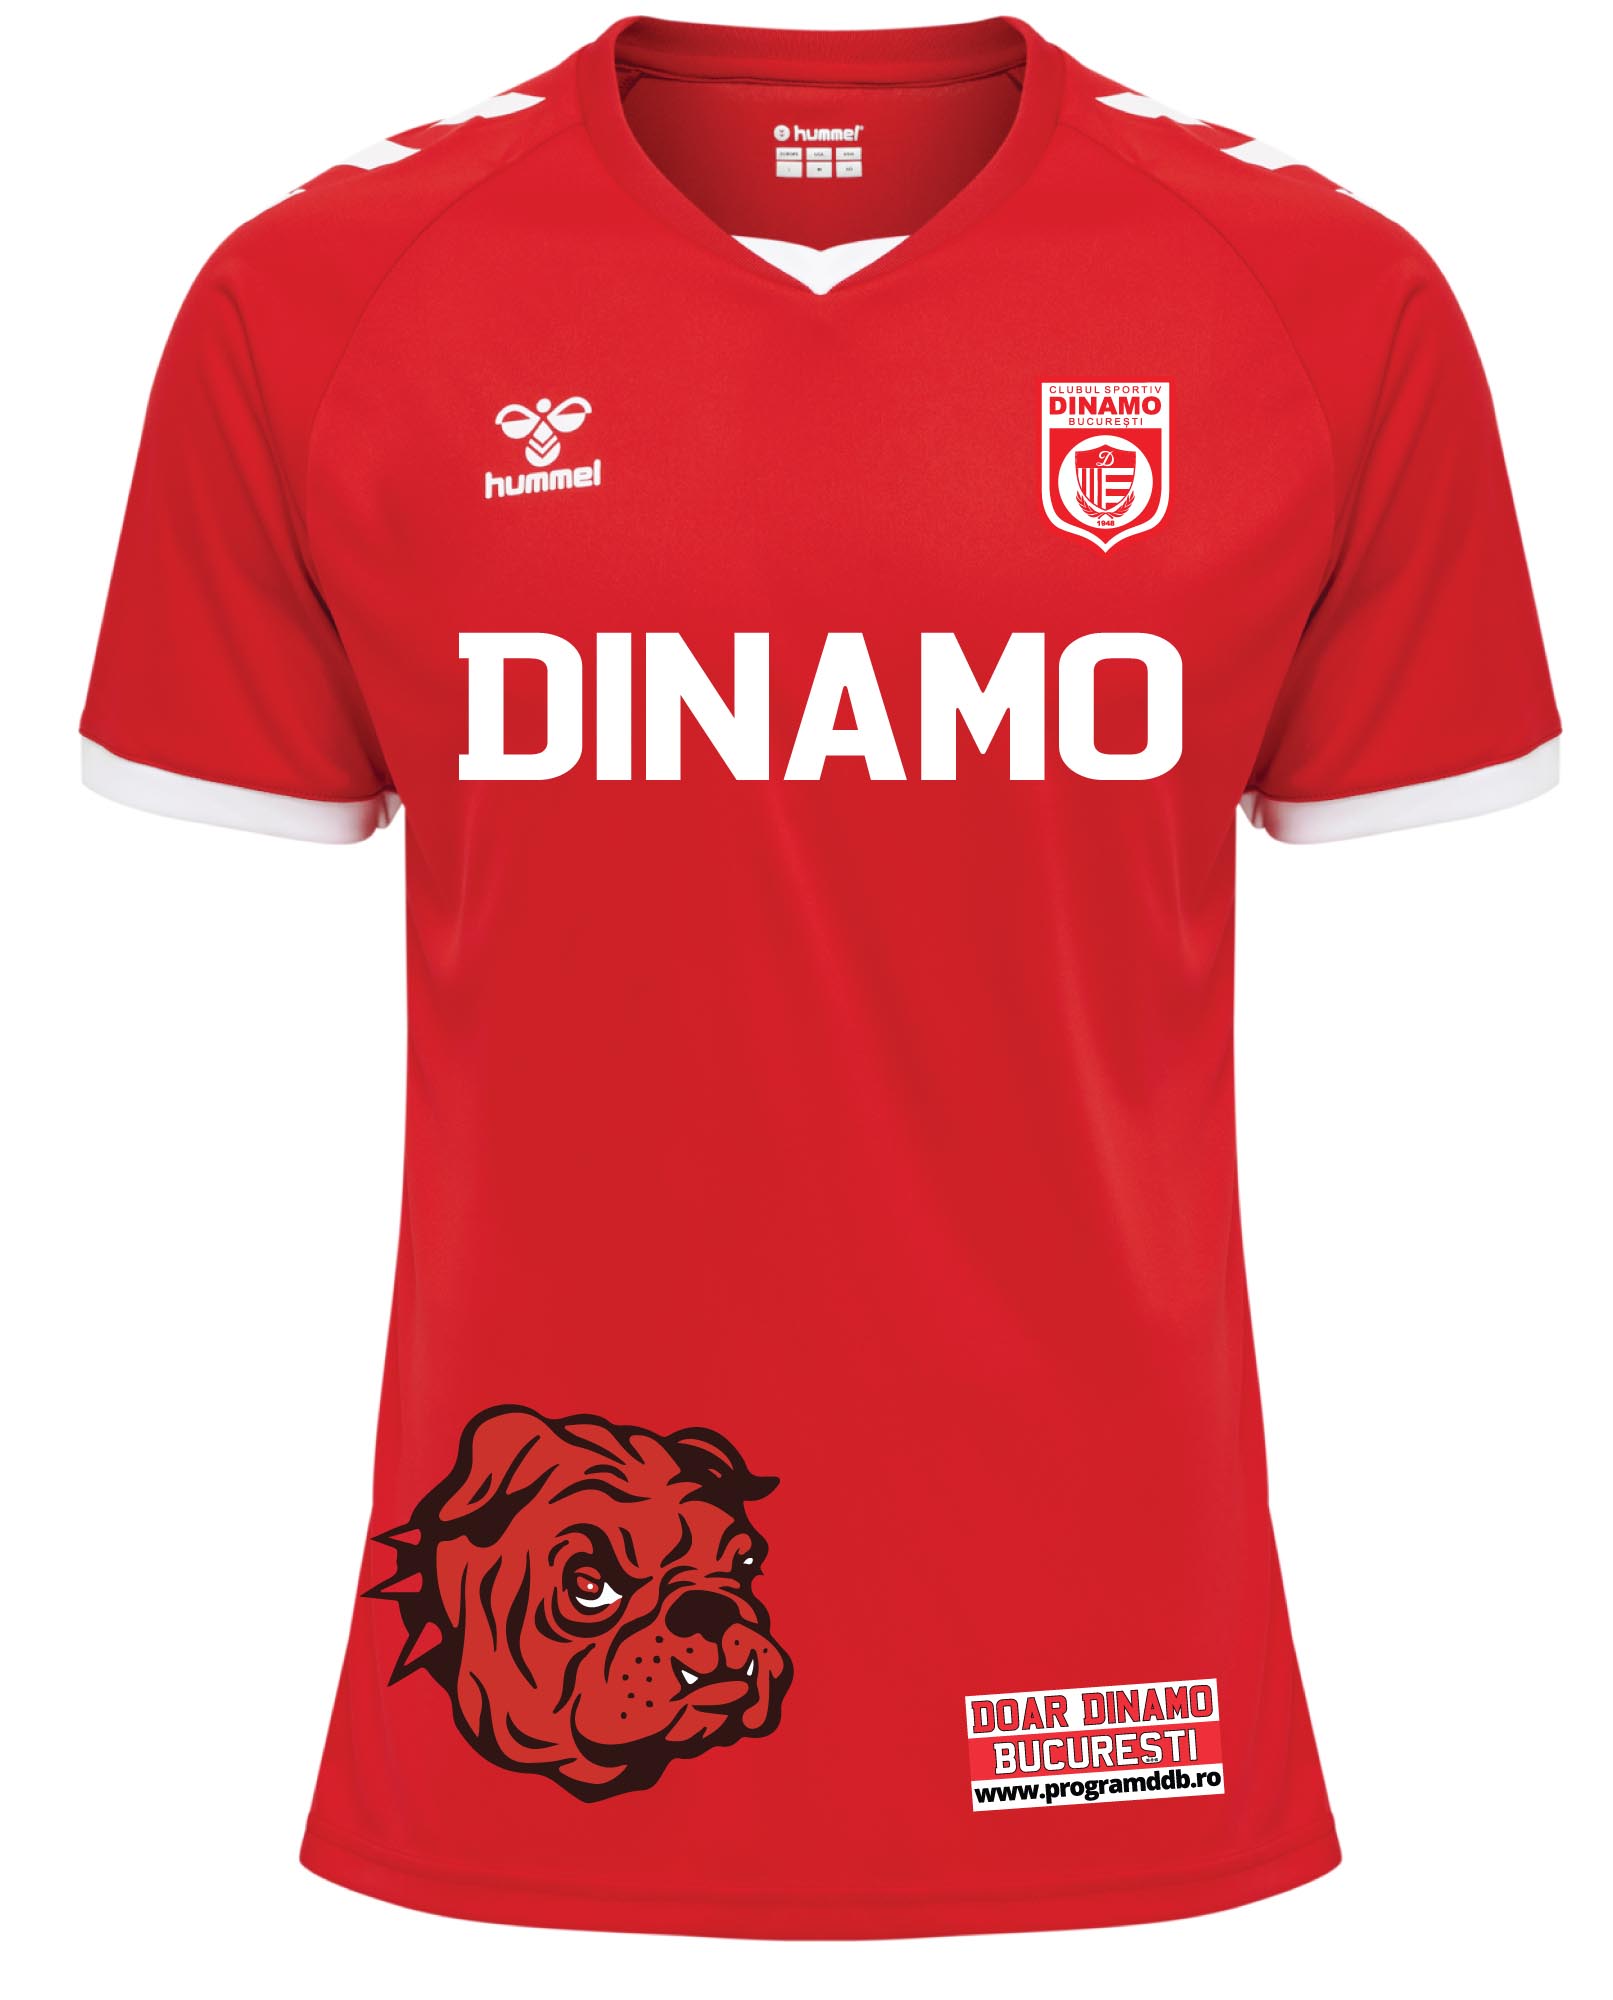 Make a name Erasure hybrid Tricou oficial de suporter hummel - Dinamo București - merasport